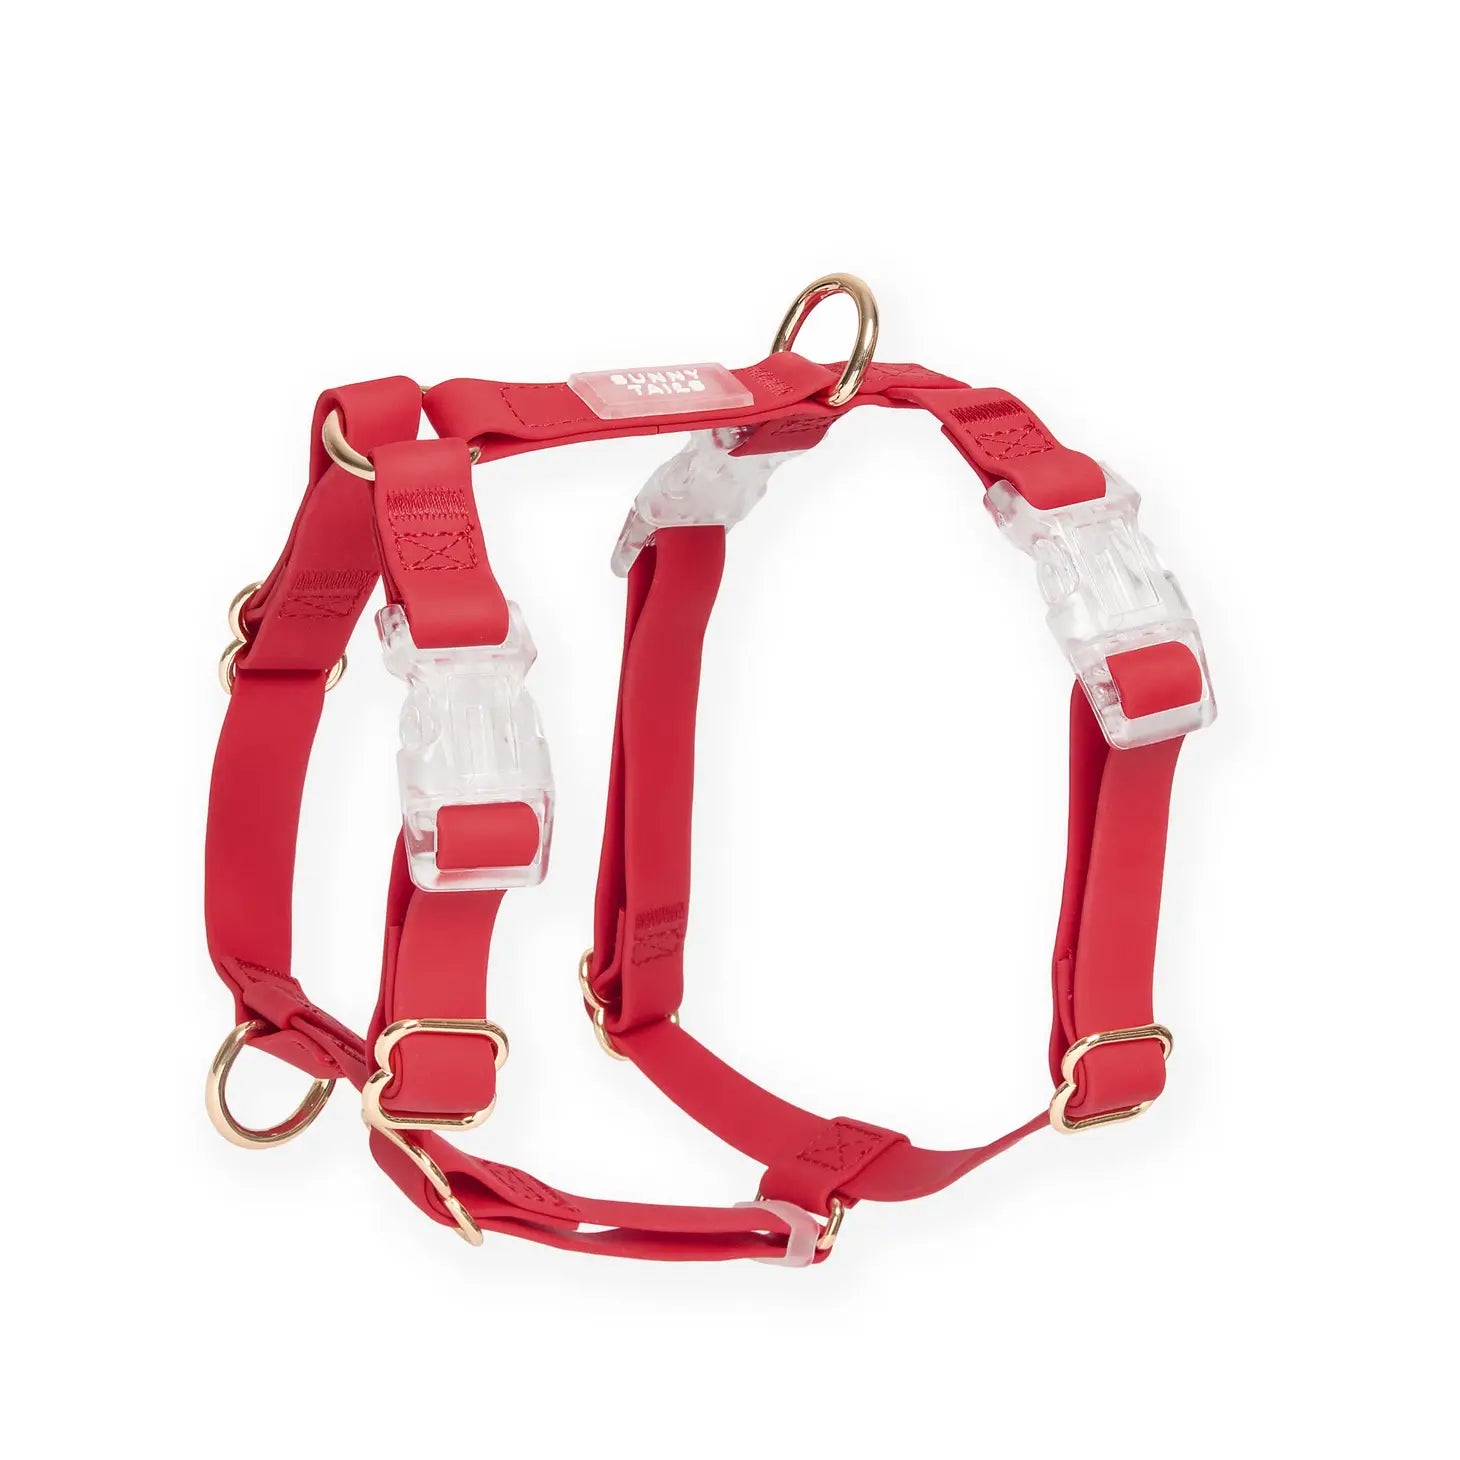 Waterproof Dog Harness - Cherry Red